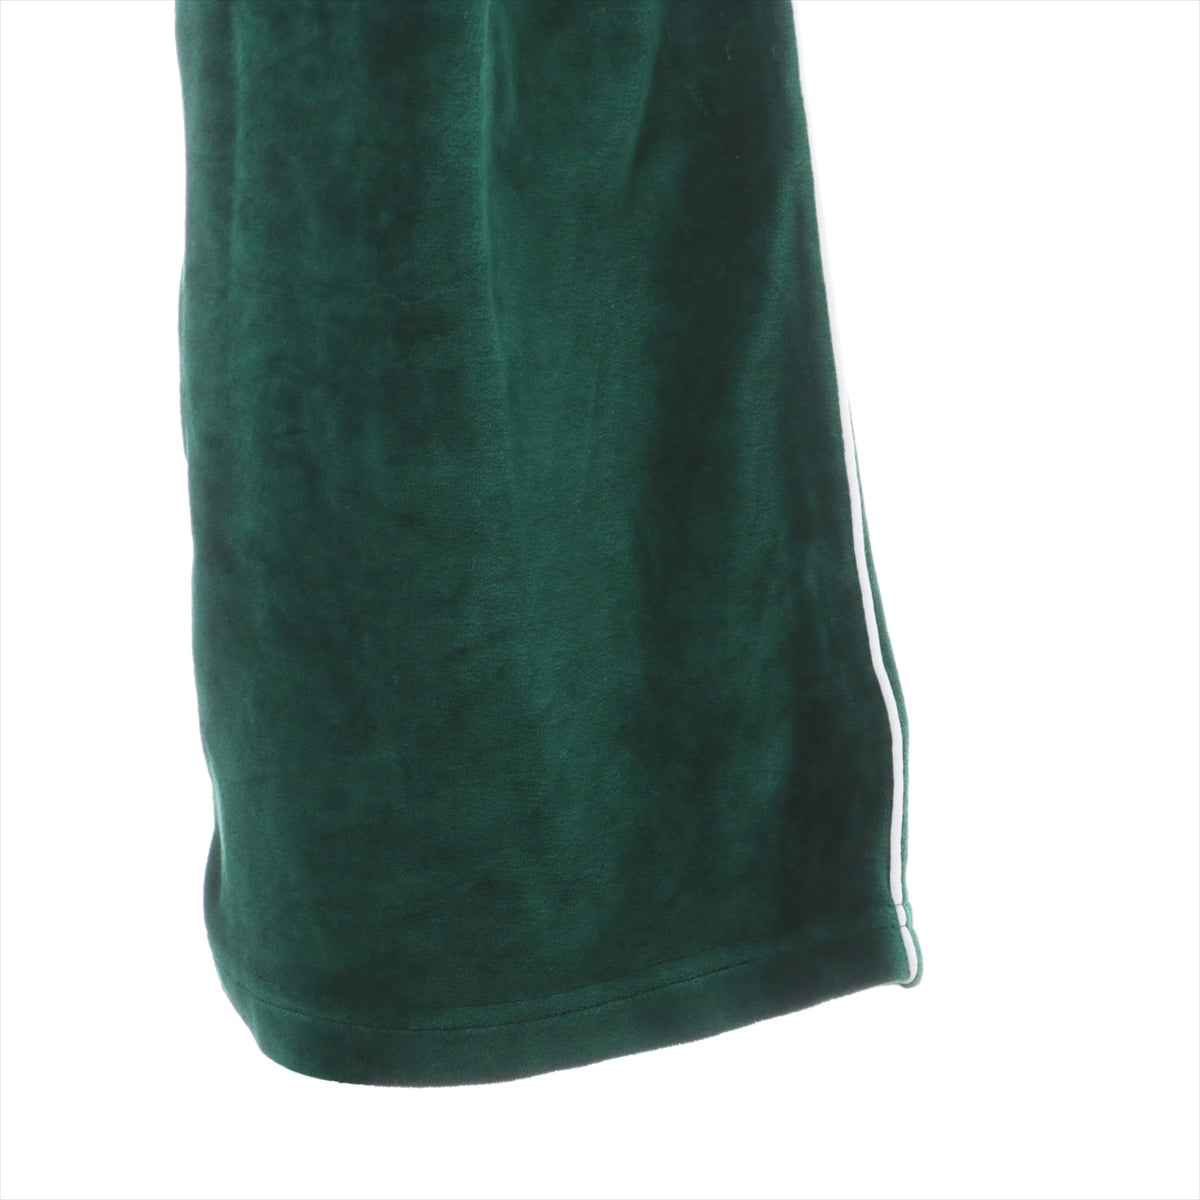 CELINE 22AW Cotton & nylon Pants L Men's Green  ベルベット ジョガーパンツ 2Z403679I ミドルライズ